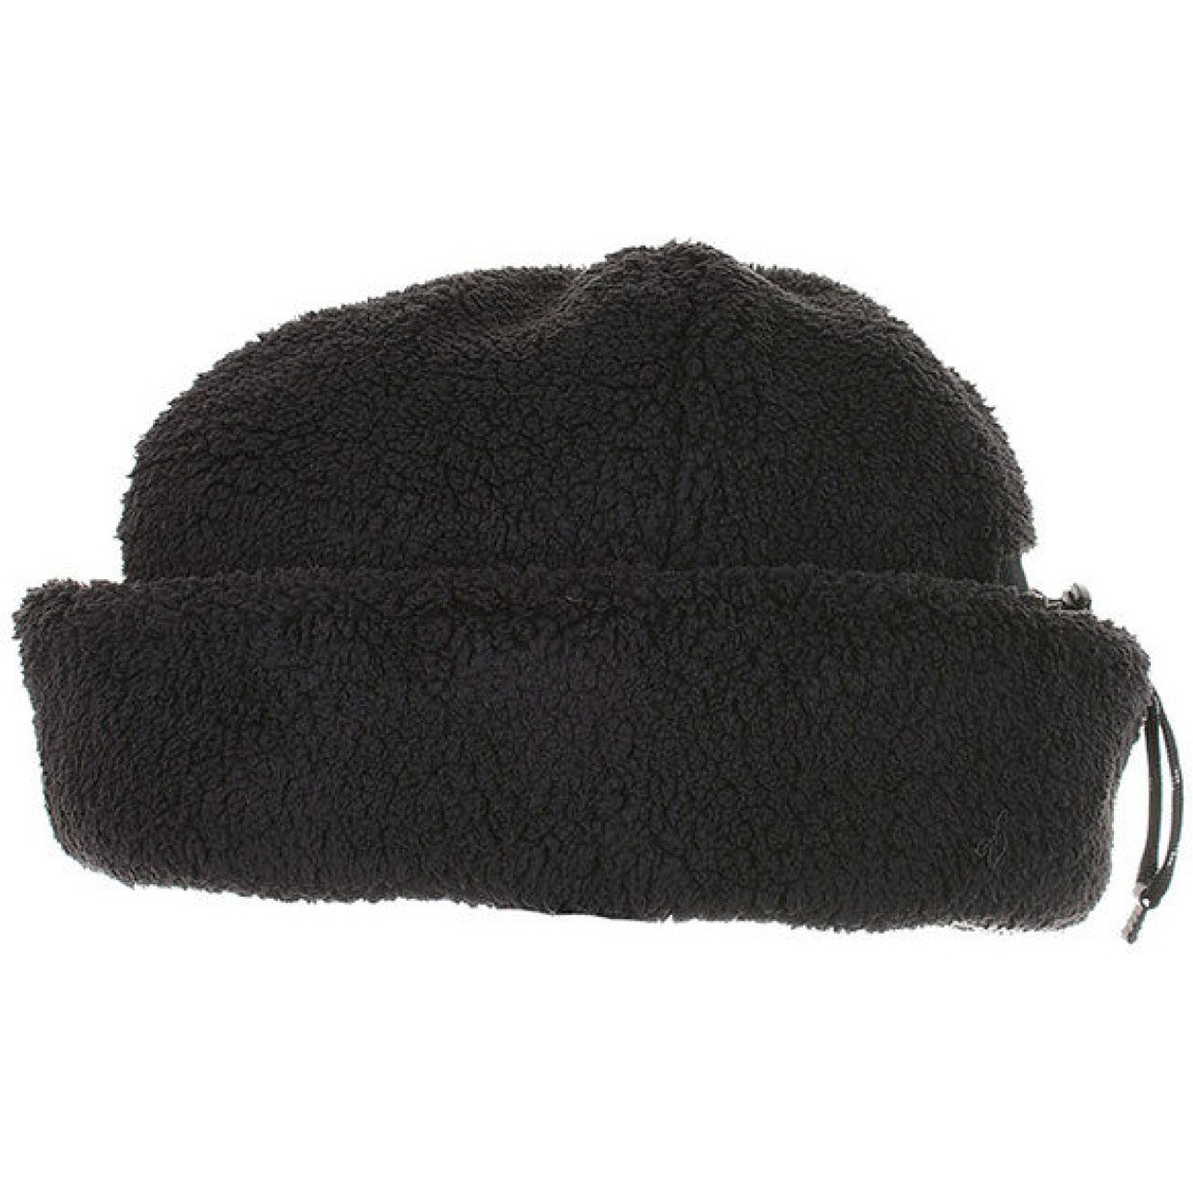 Cableami Winter Hat Boa Torque, Black